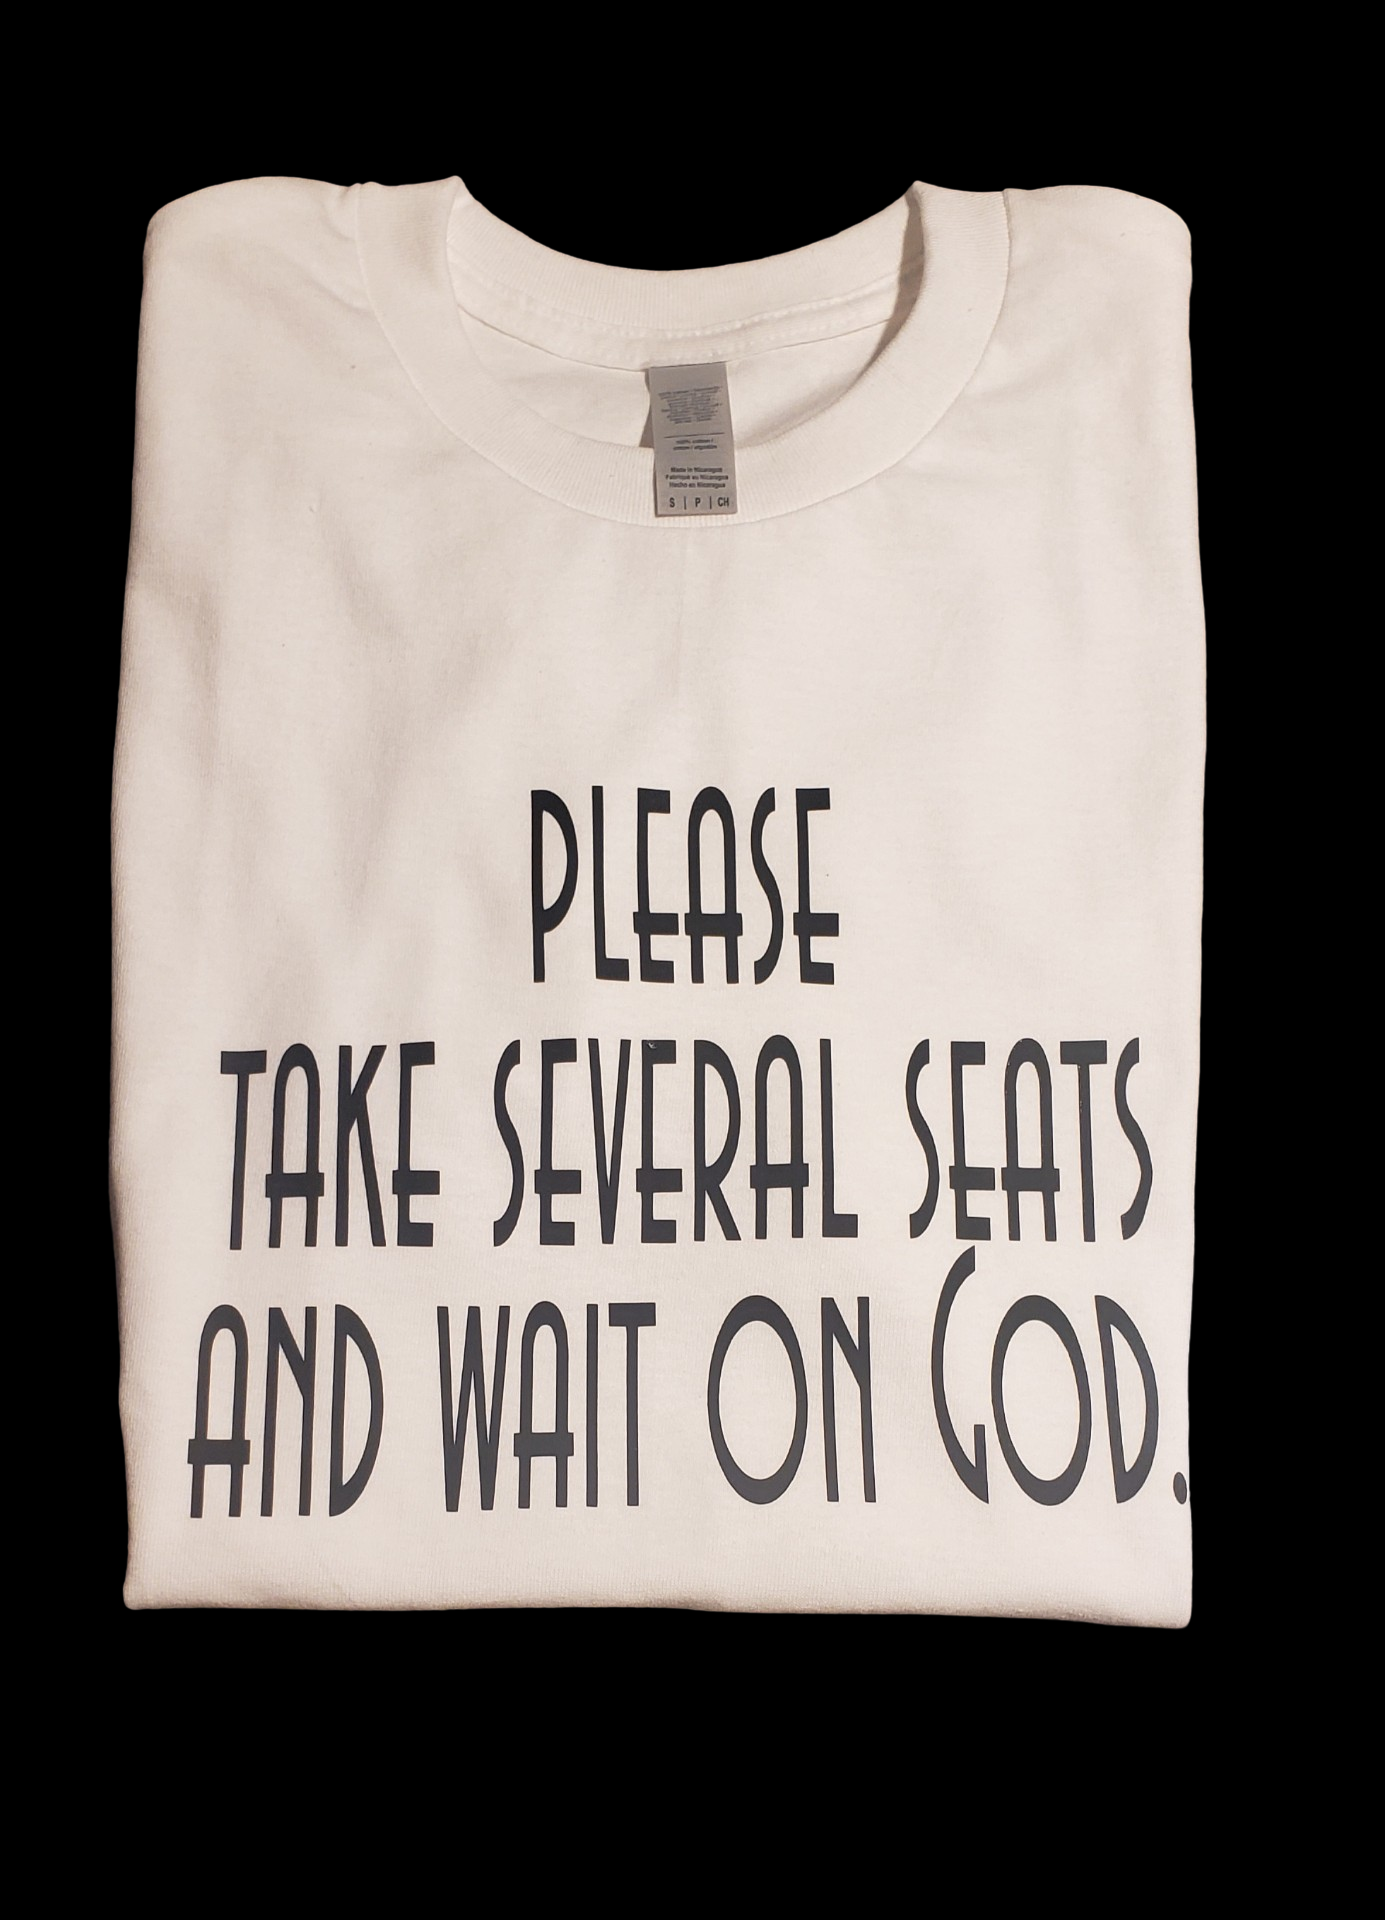 Please take several seats t-shirt